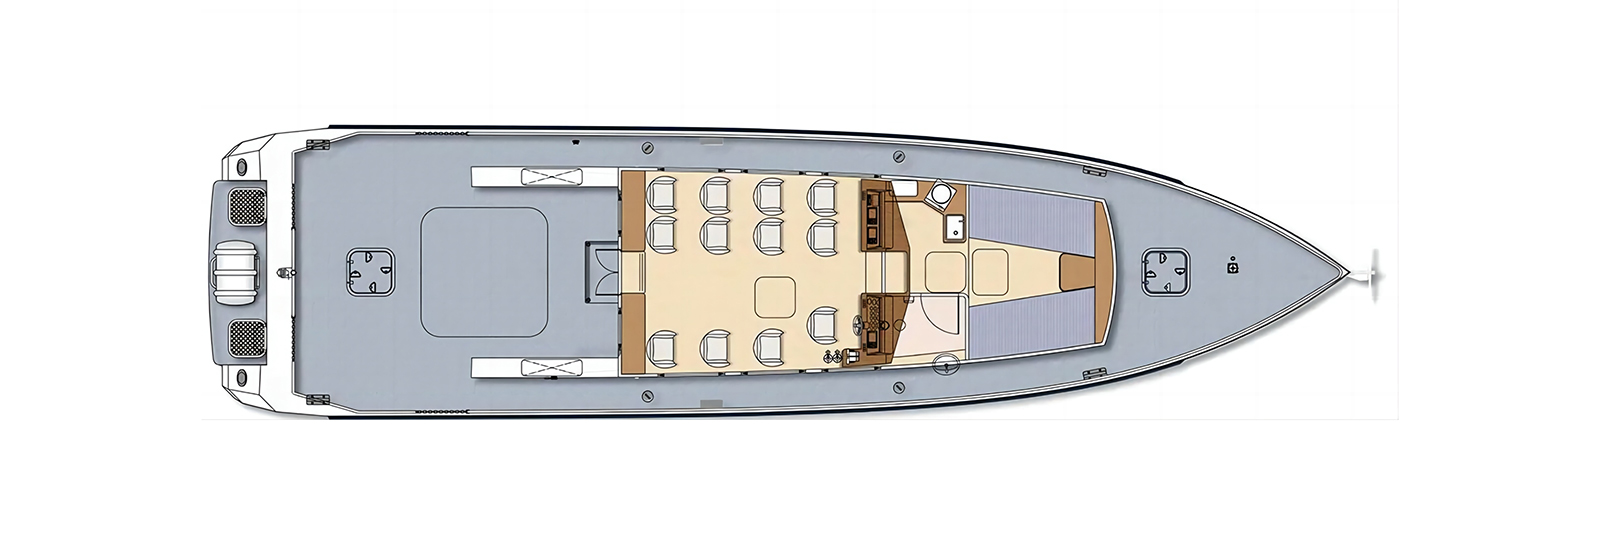 1807 (Hurricane) Coastal Super-high-speed Patrol Boat layout (2)6i7